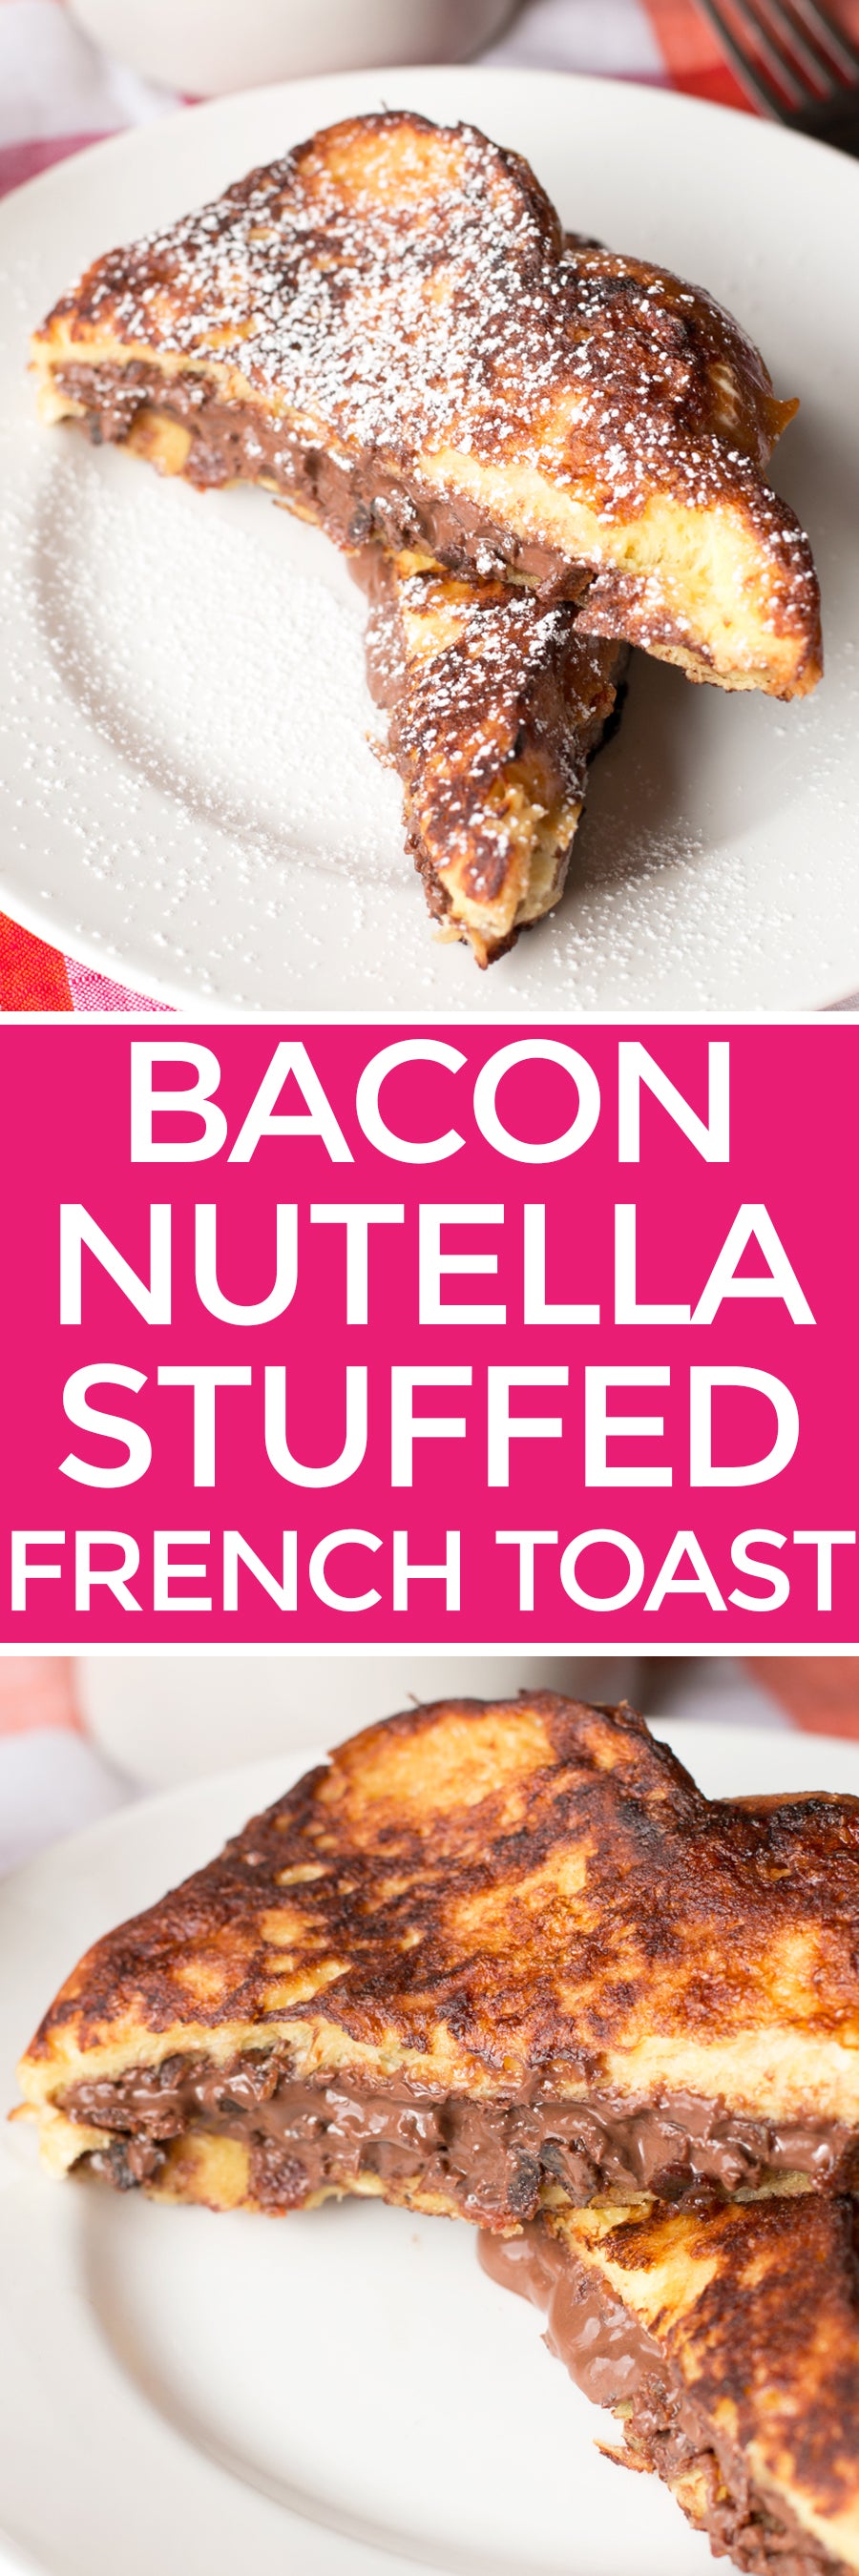 Bacon Nutella Stuffed French Toast | pigofthemonth.com #chocolate #breakfast #brunch